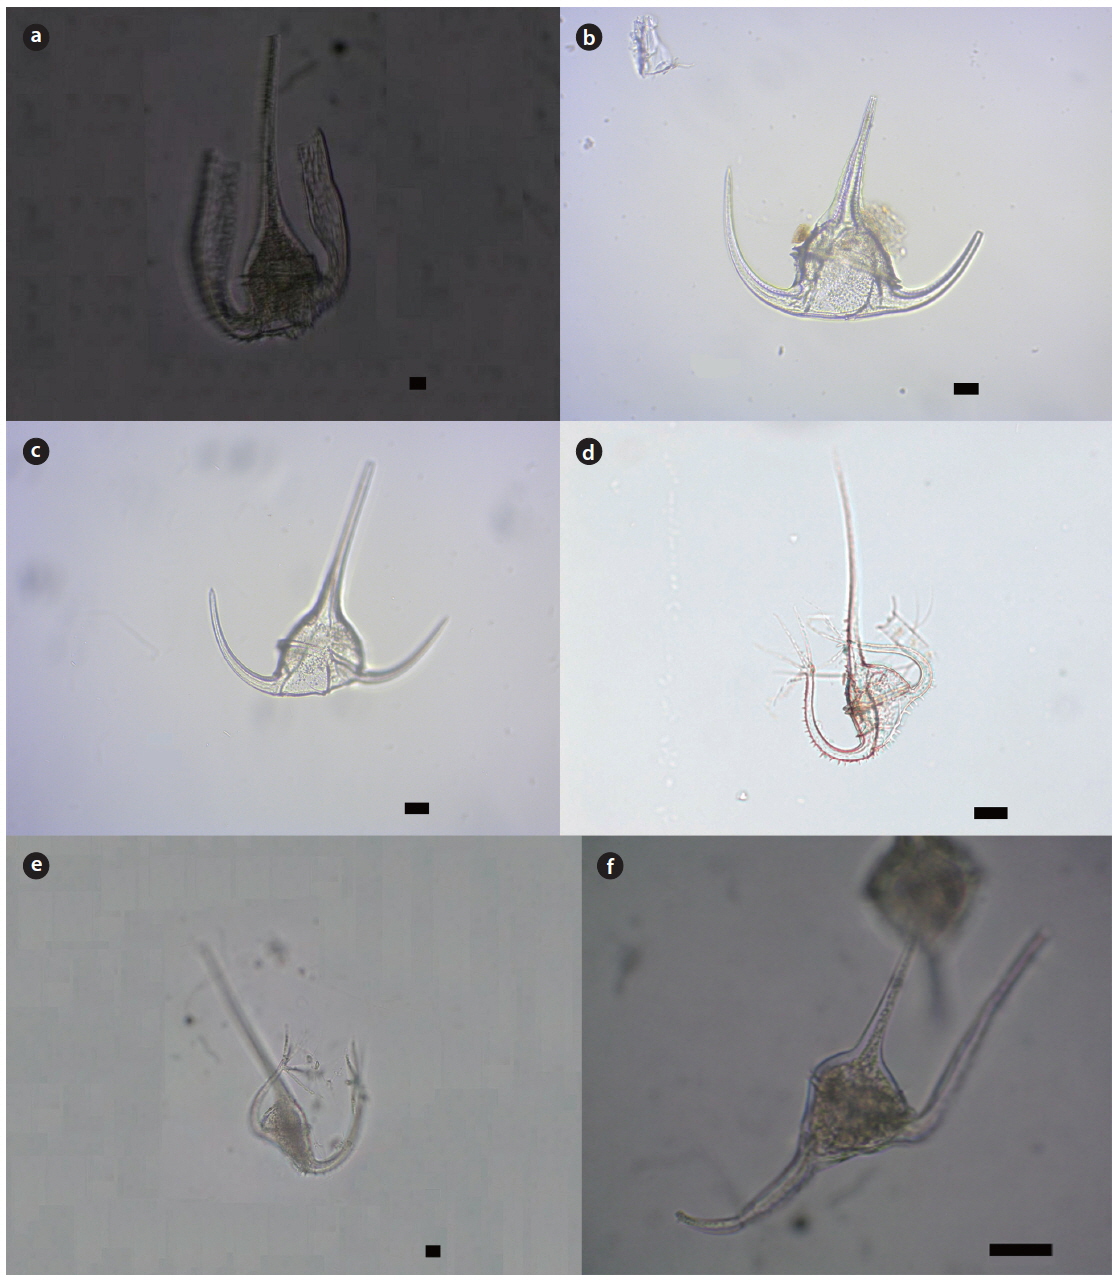 Light micrographs of the genus Tripos. (a) T. platycornis var. cuneatus (DV), (b) T. porrectus f. megasomus (DV), (c) T. pulchellum f. semipulchellum (DV), (d) T. palmatus (DV), (e) T. ranipes var. palmatus (VV), (f ) T. reflexus (DV). Scale bars, 20 μm; DV, dorsal view; VV, ventral view.